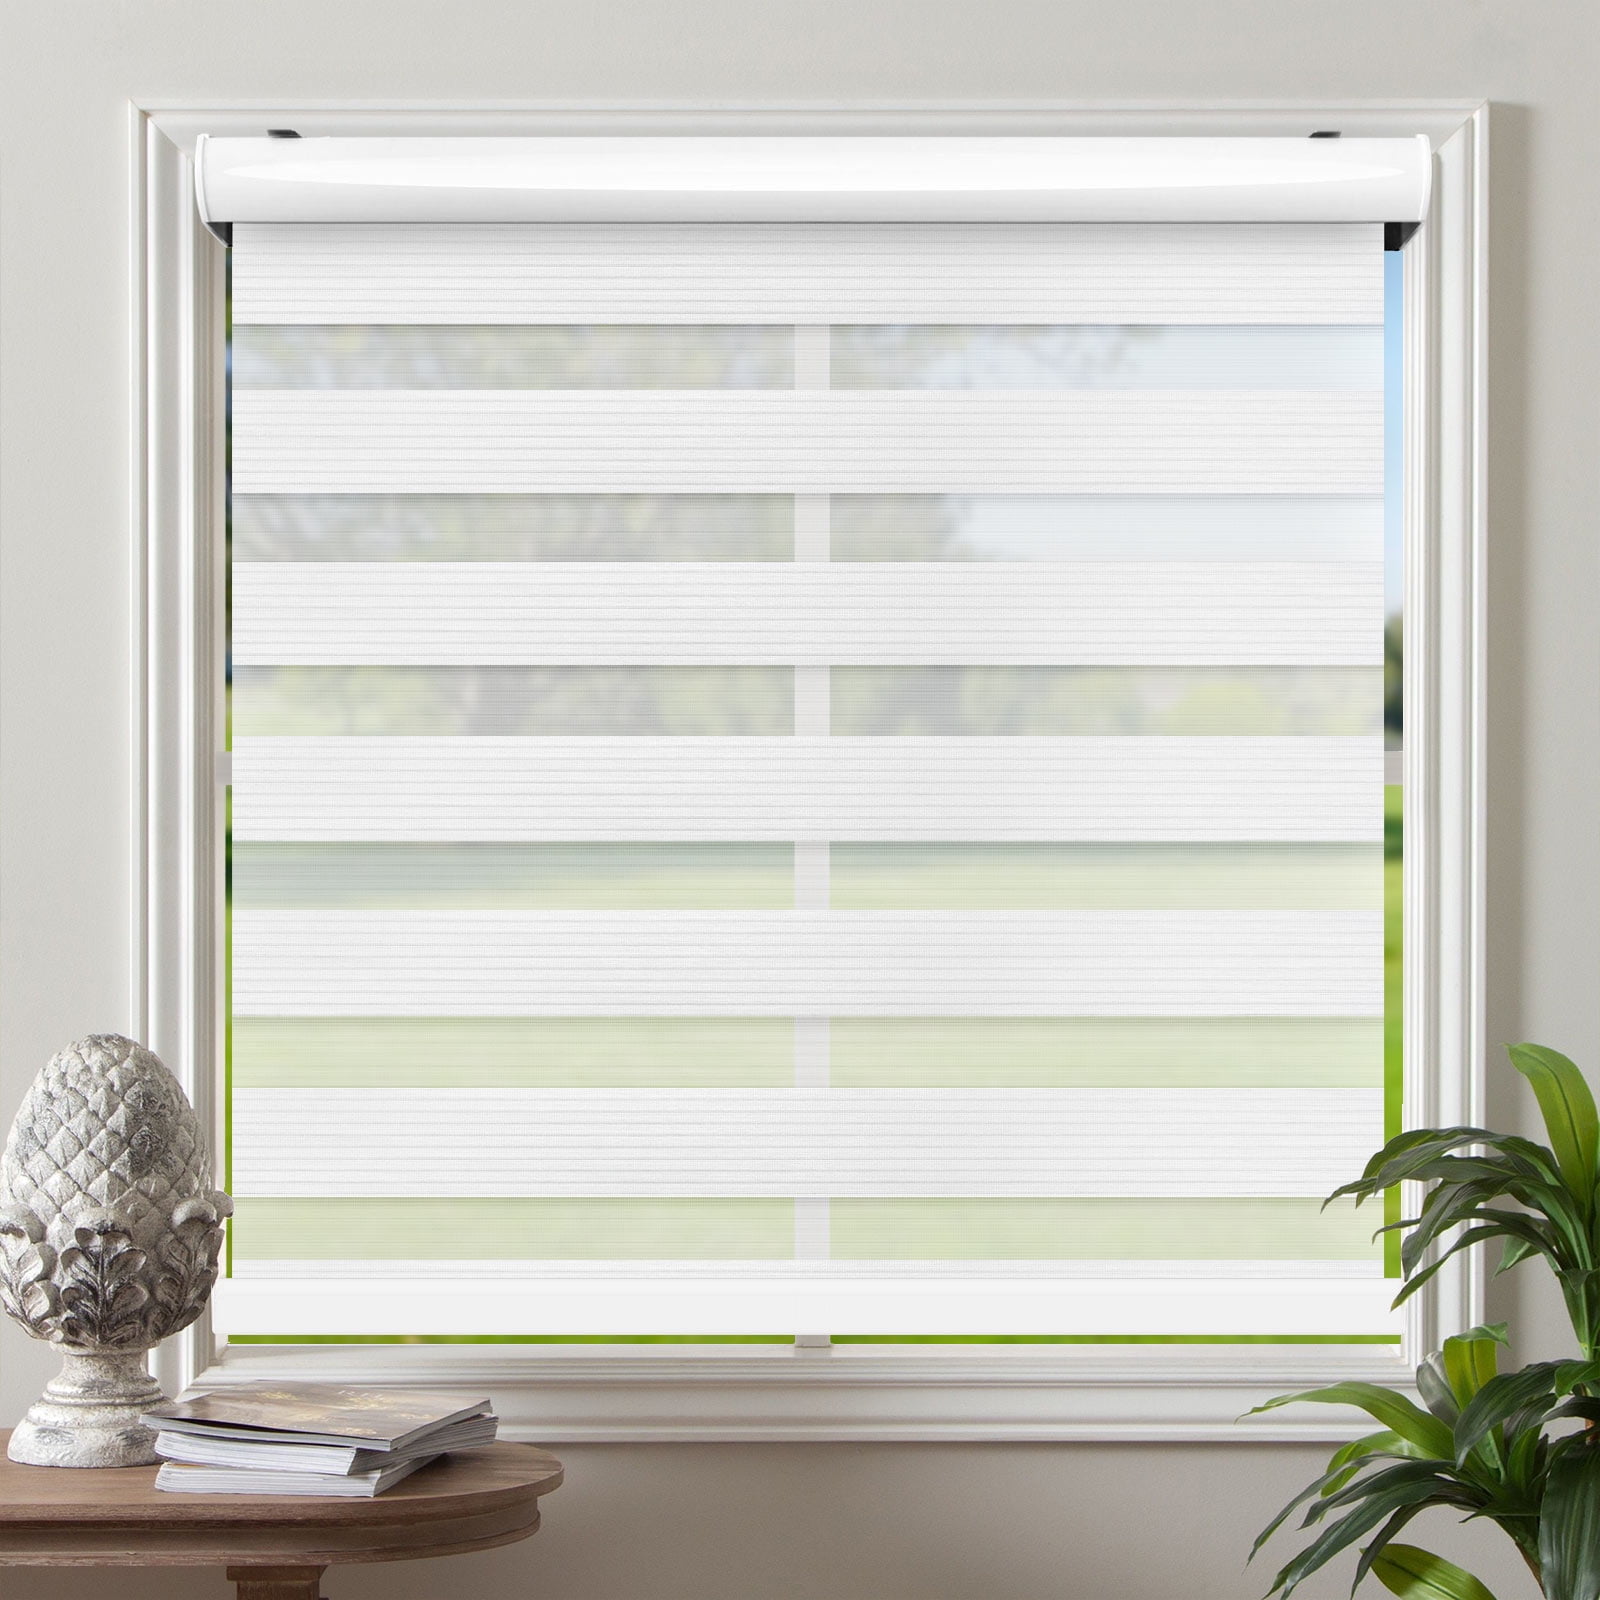 Biltek Horizontal Window Blinds 1" Blind White 59-Inch Width by 64-Inch Height 